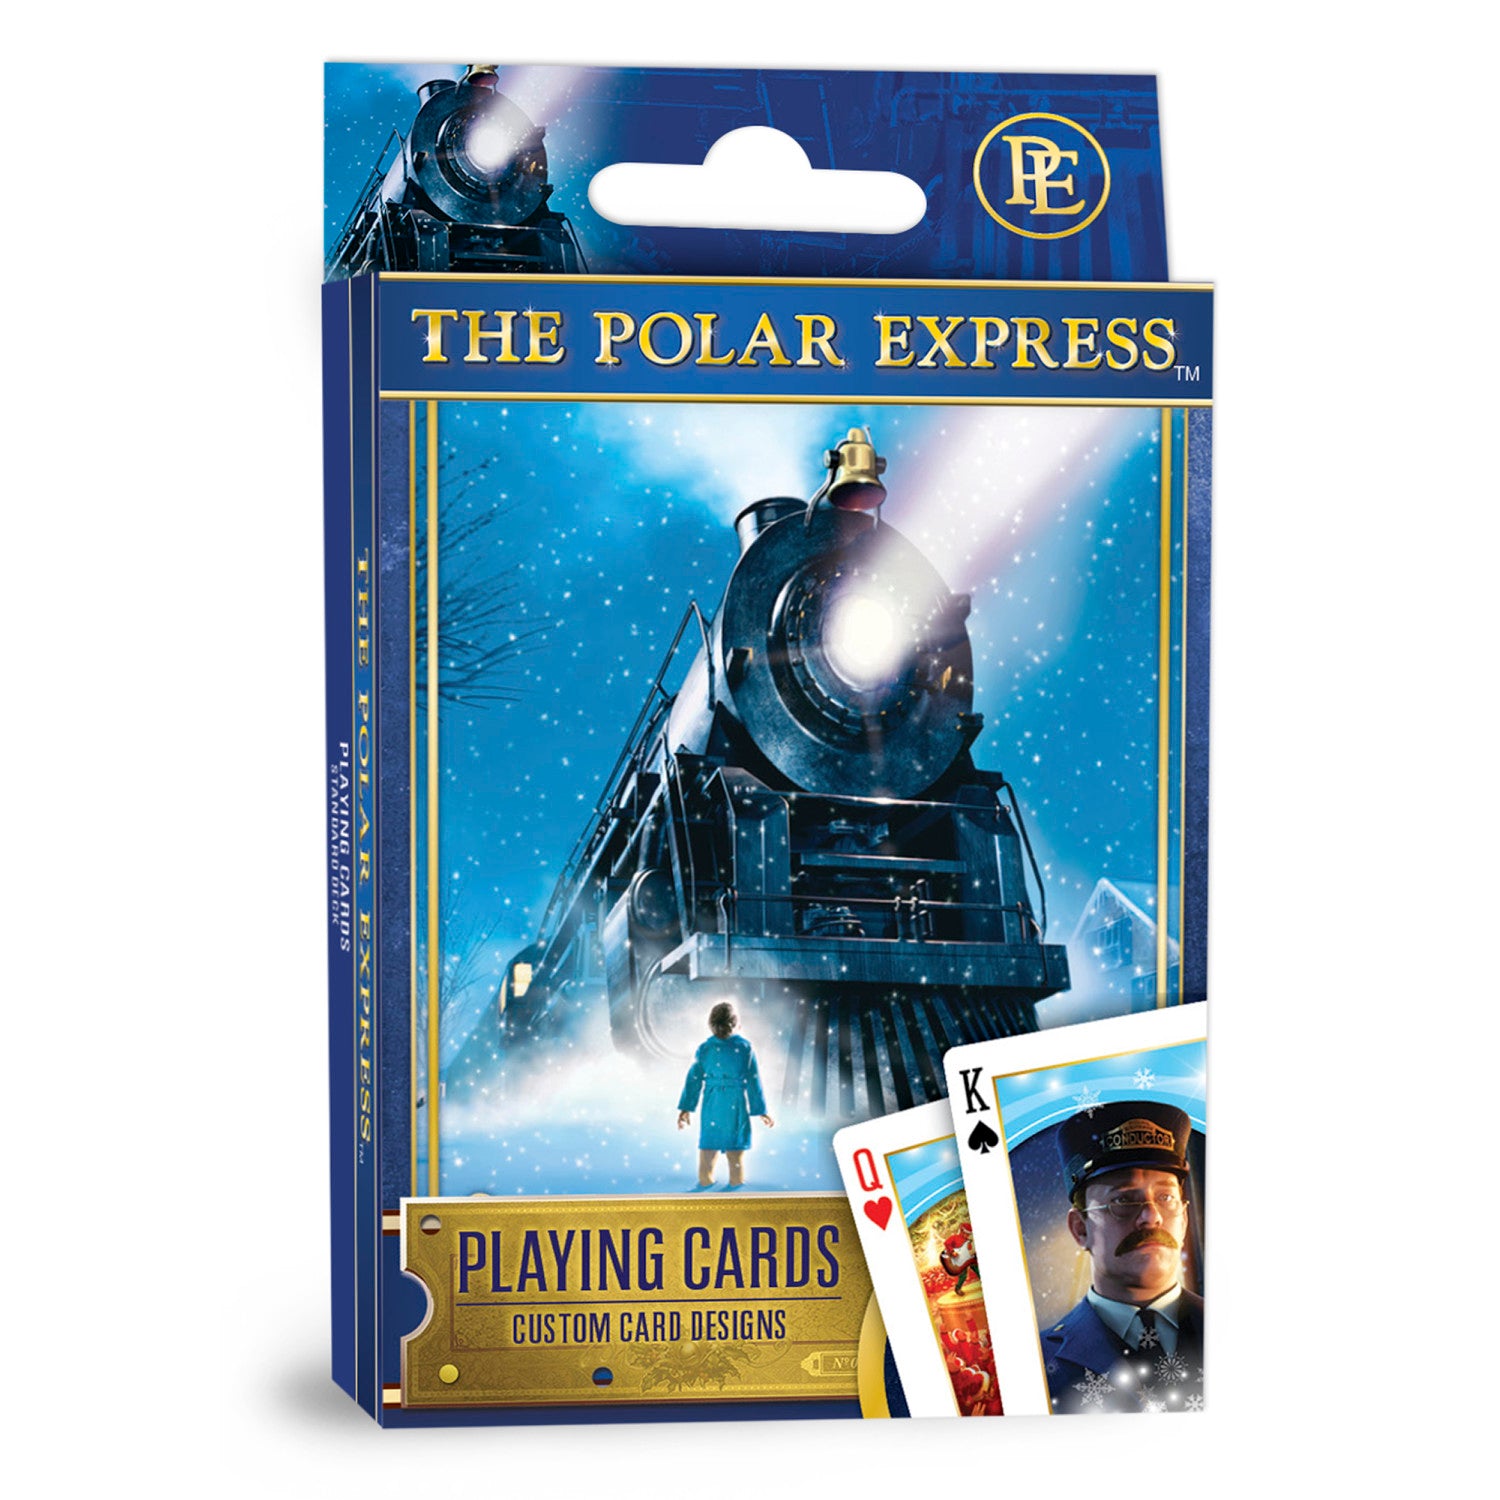 The Polar Express Playing Cards